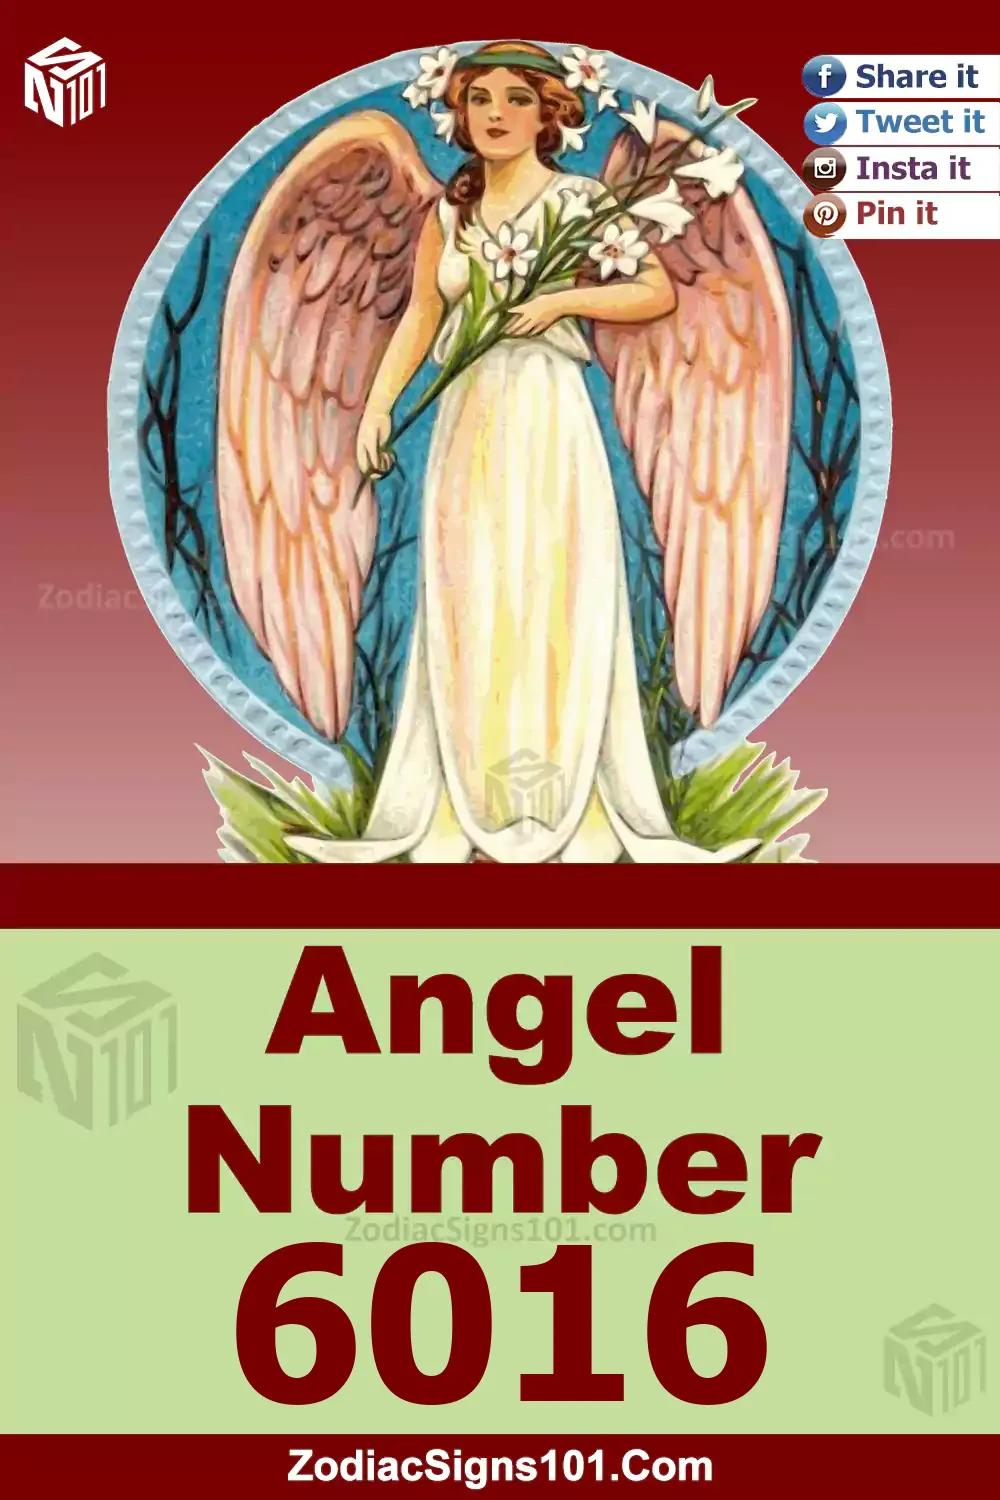 6016-Angel-Number-Meaning.jpg